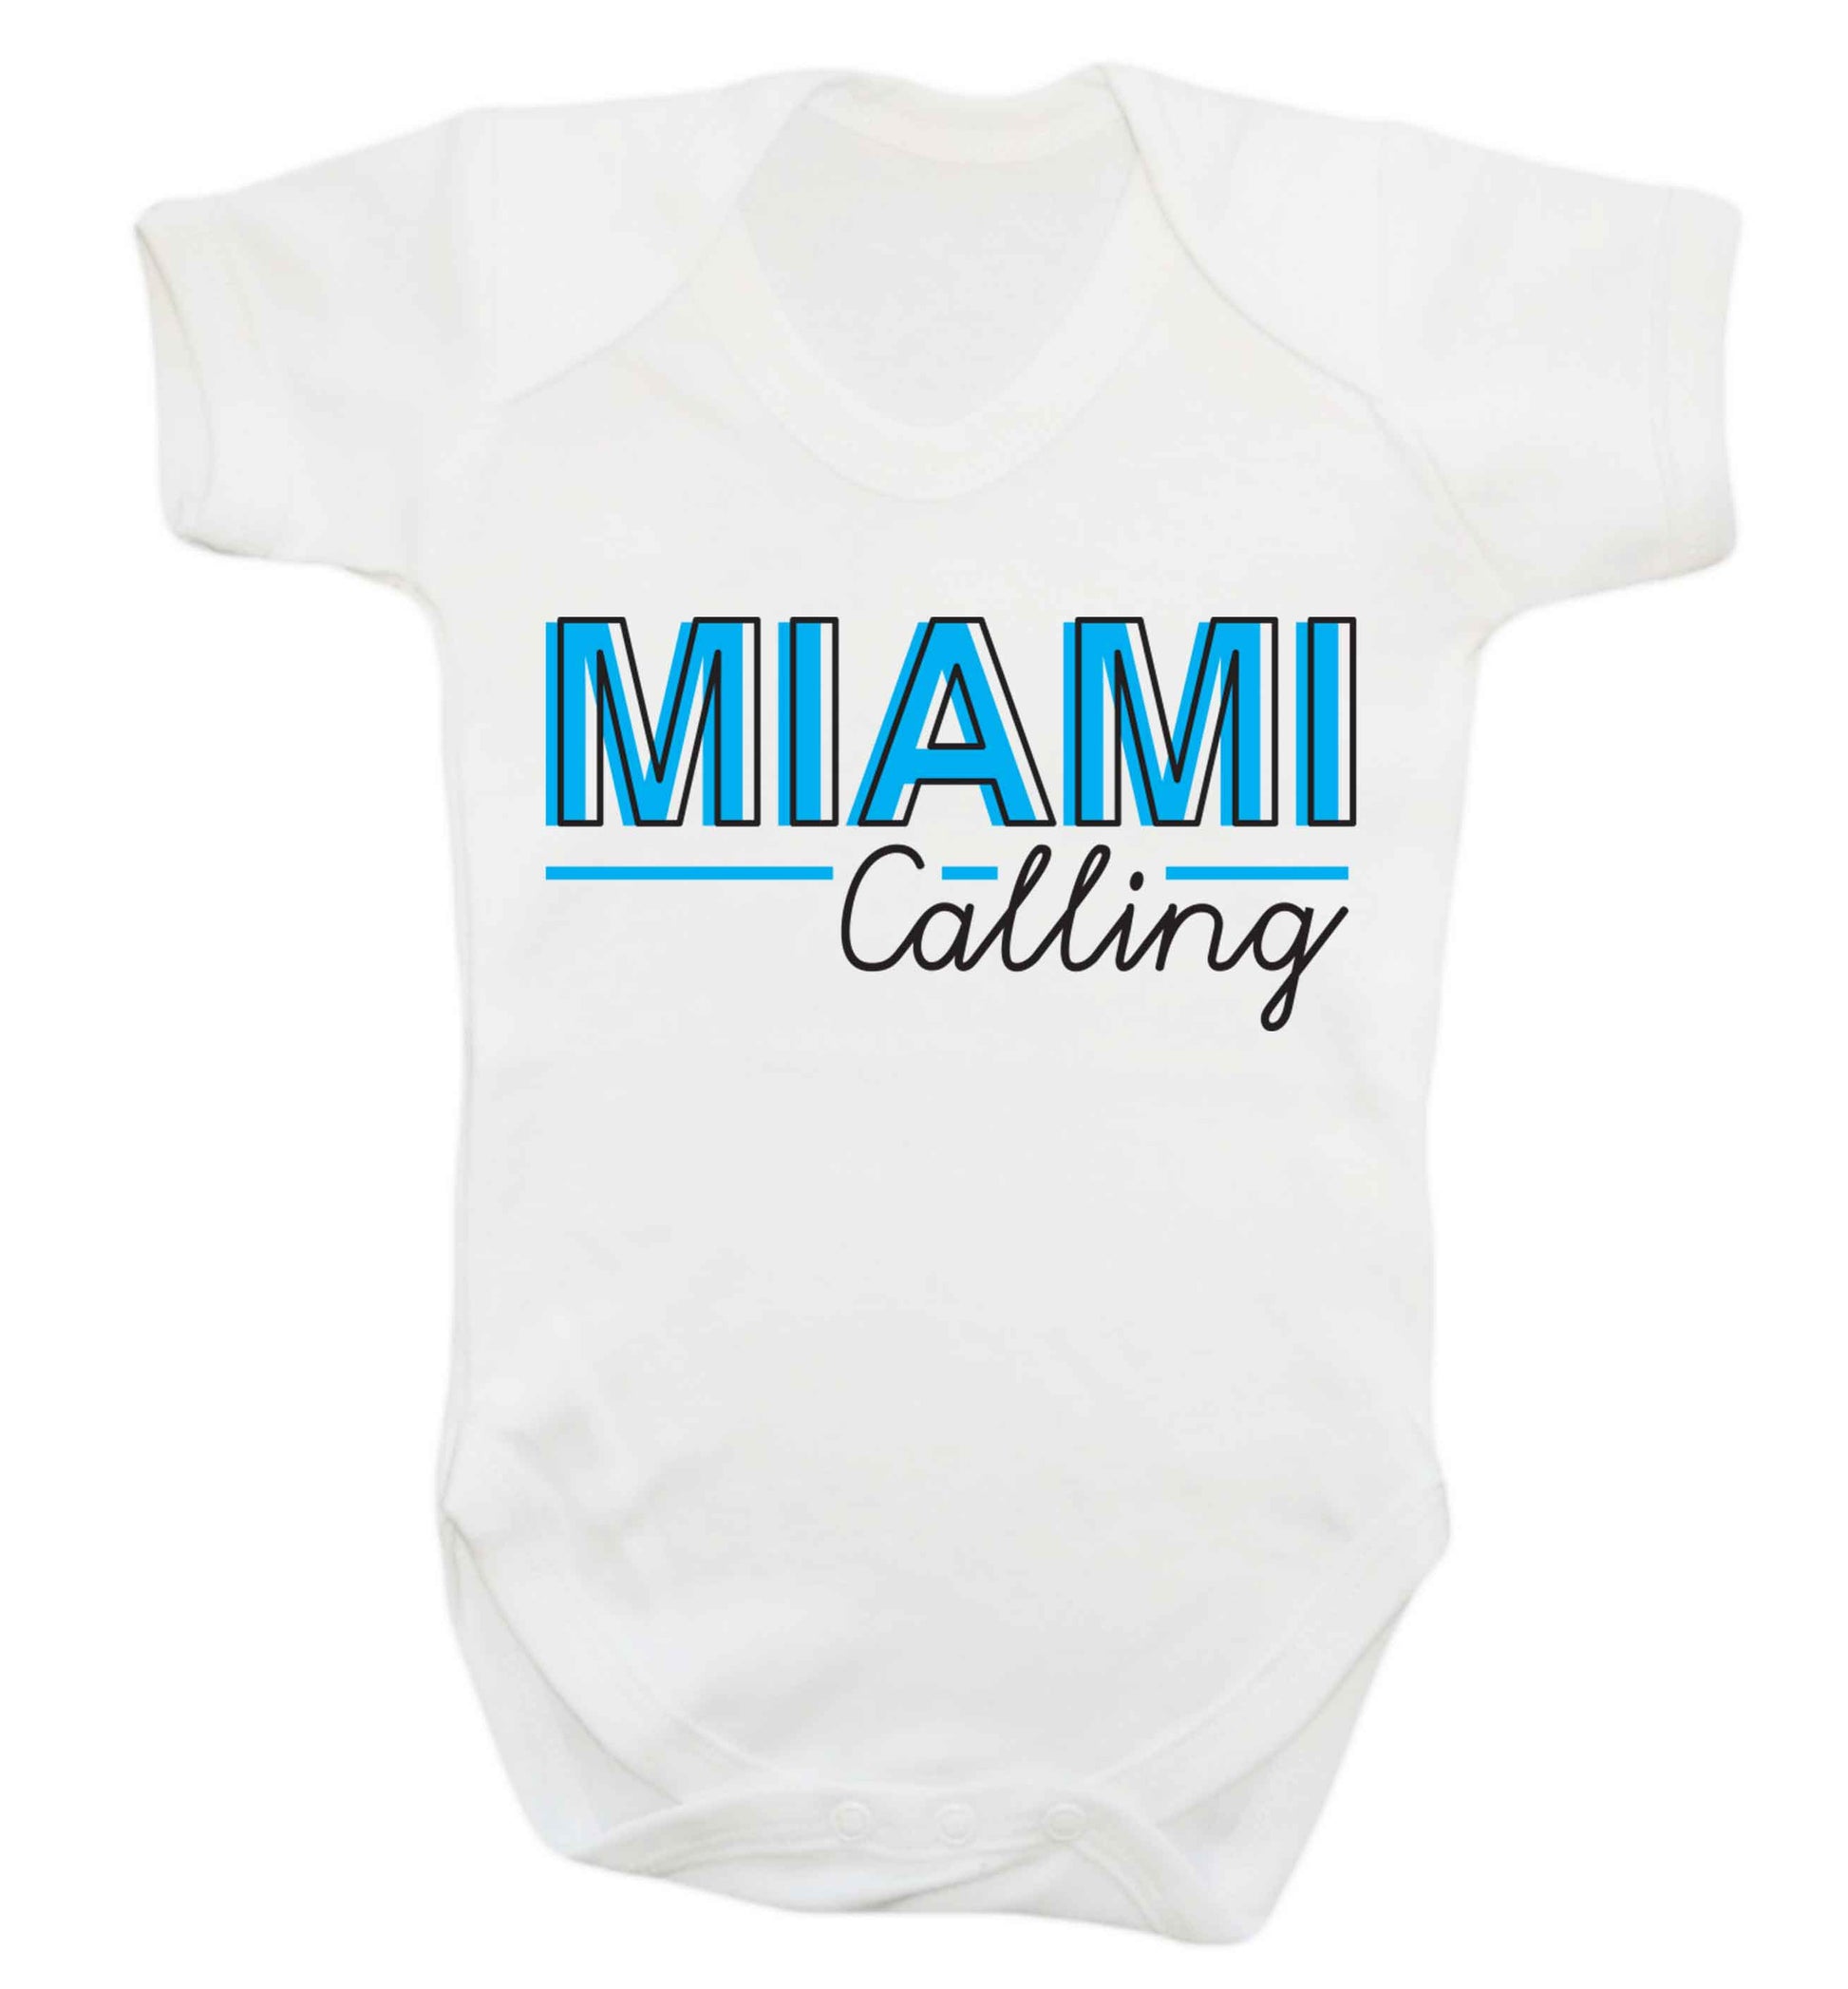 Miami calling Baby Vest white 18-24 months